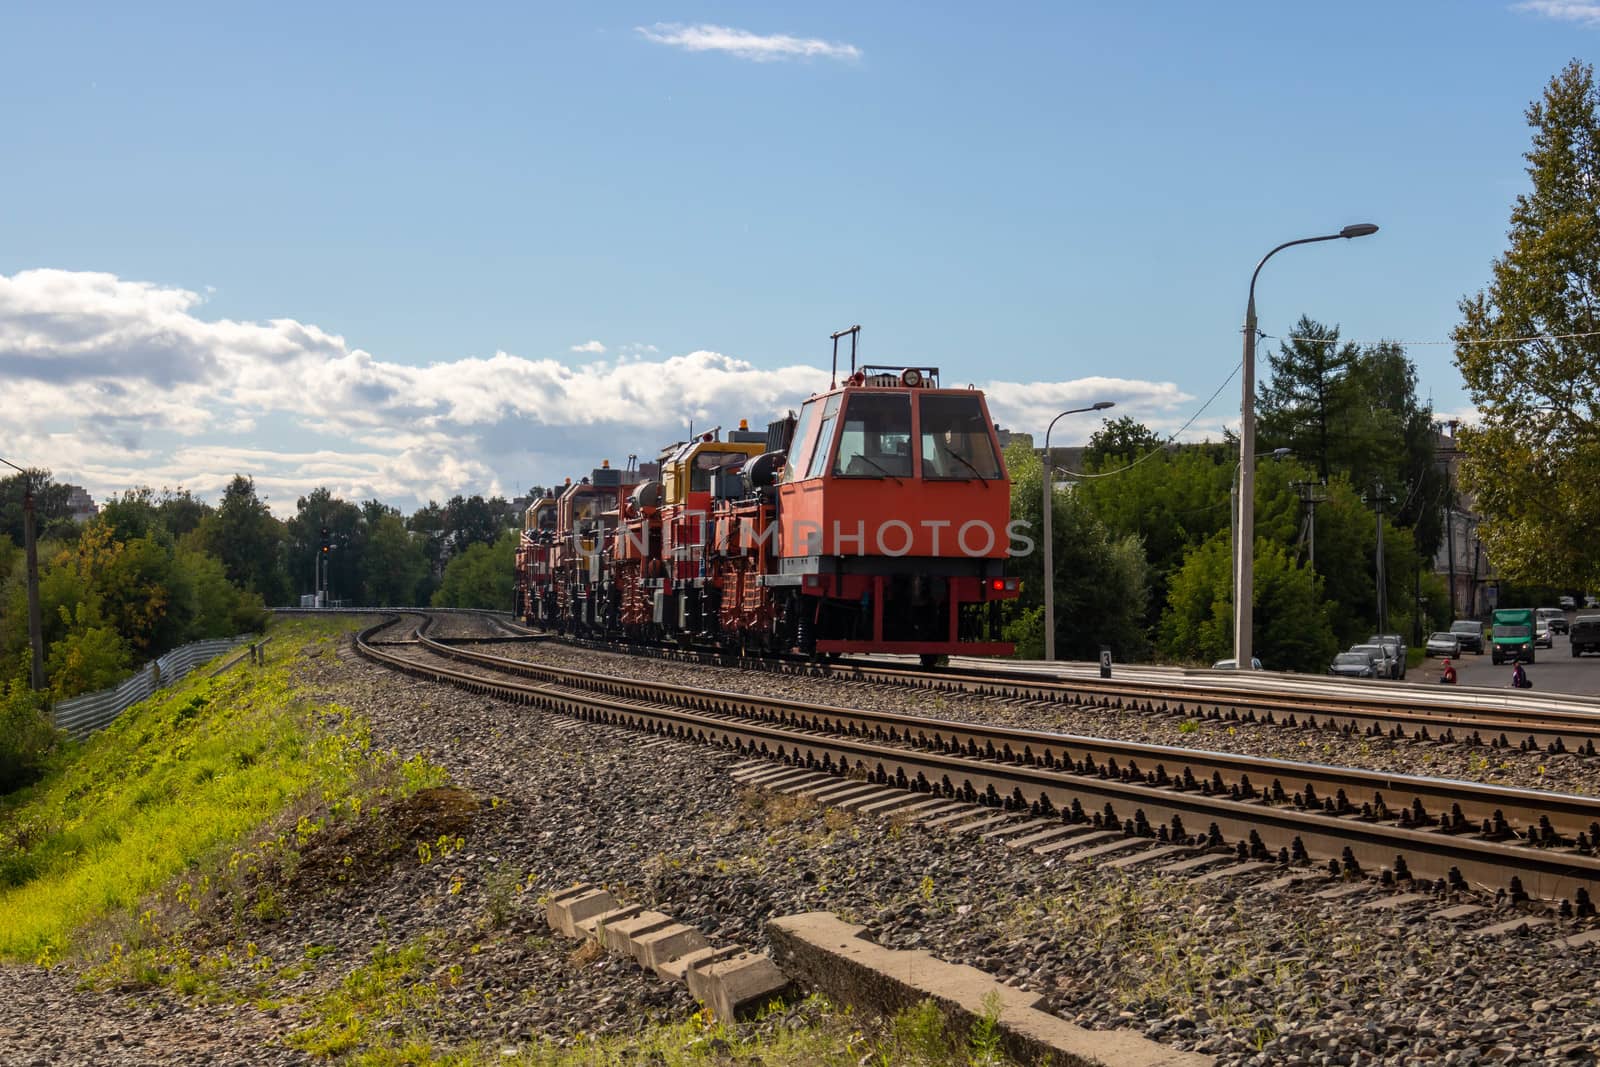 On the railway bridge is a locomotive. by lapushka62